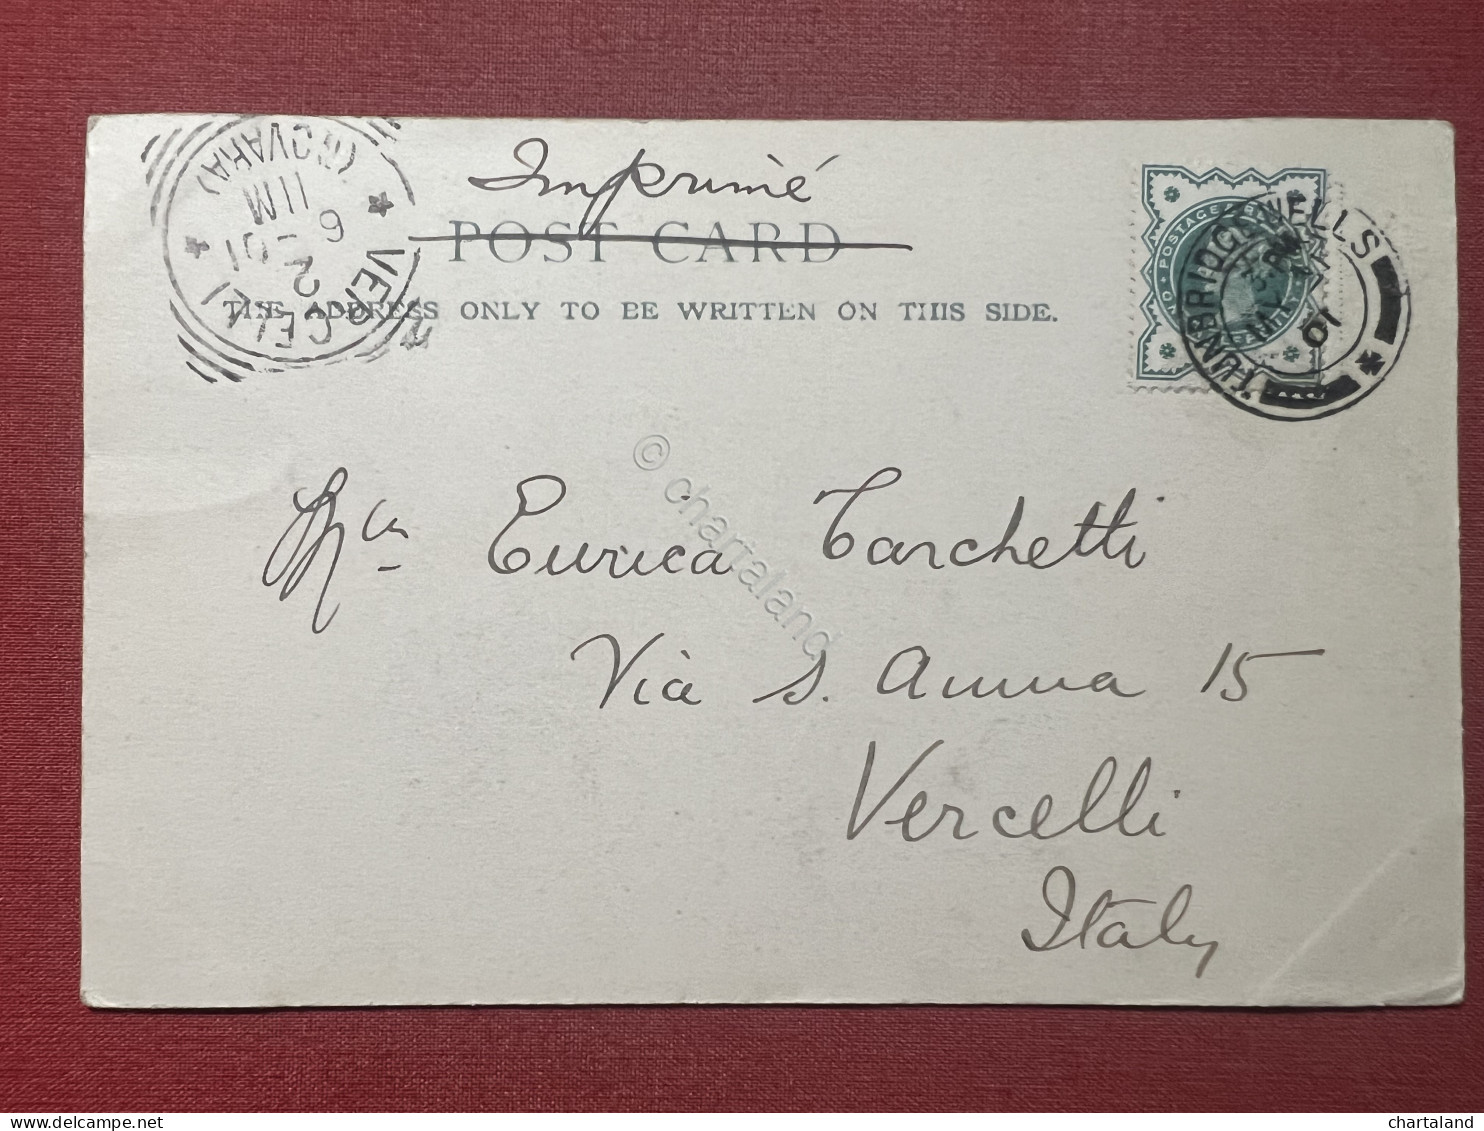 Cartolina Commemorativa - H. M. Queen Alexandra - 1901 - Unclassified